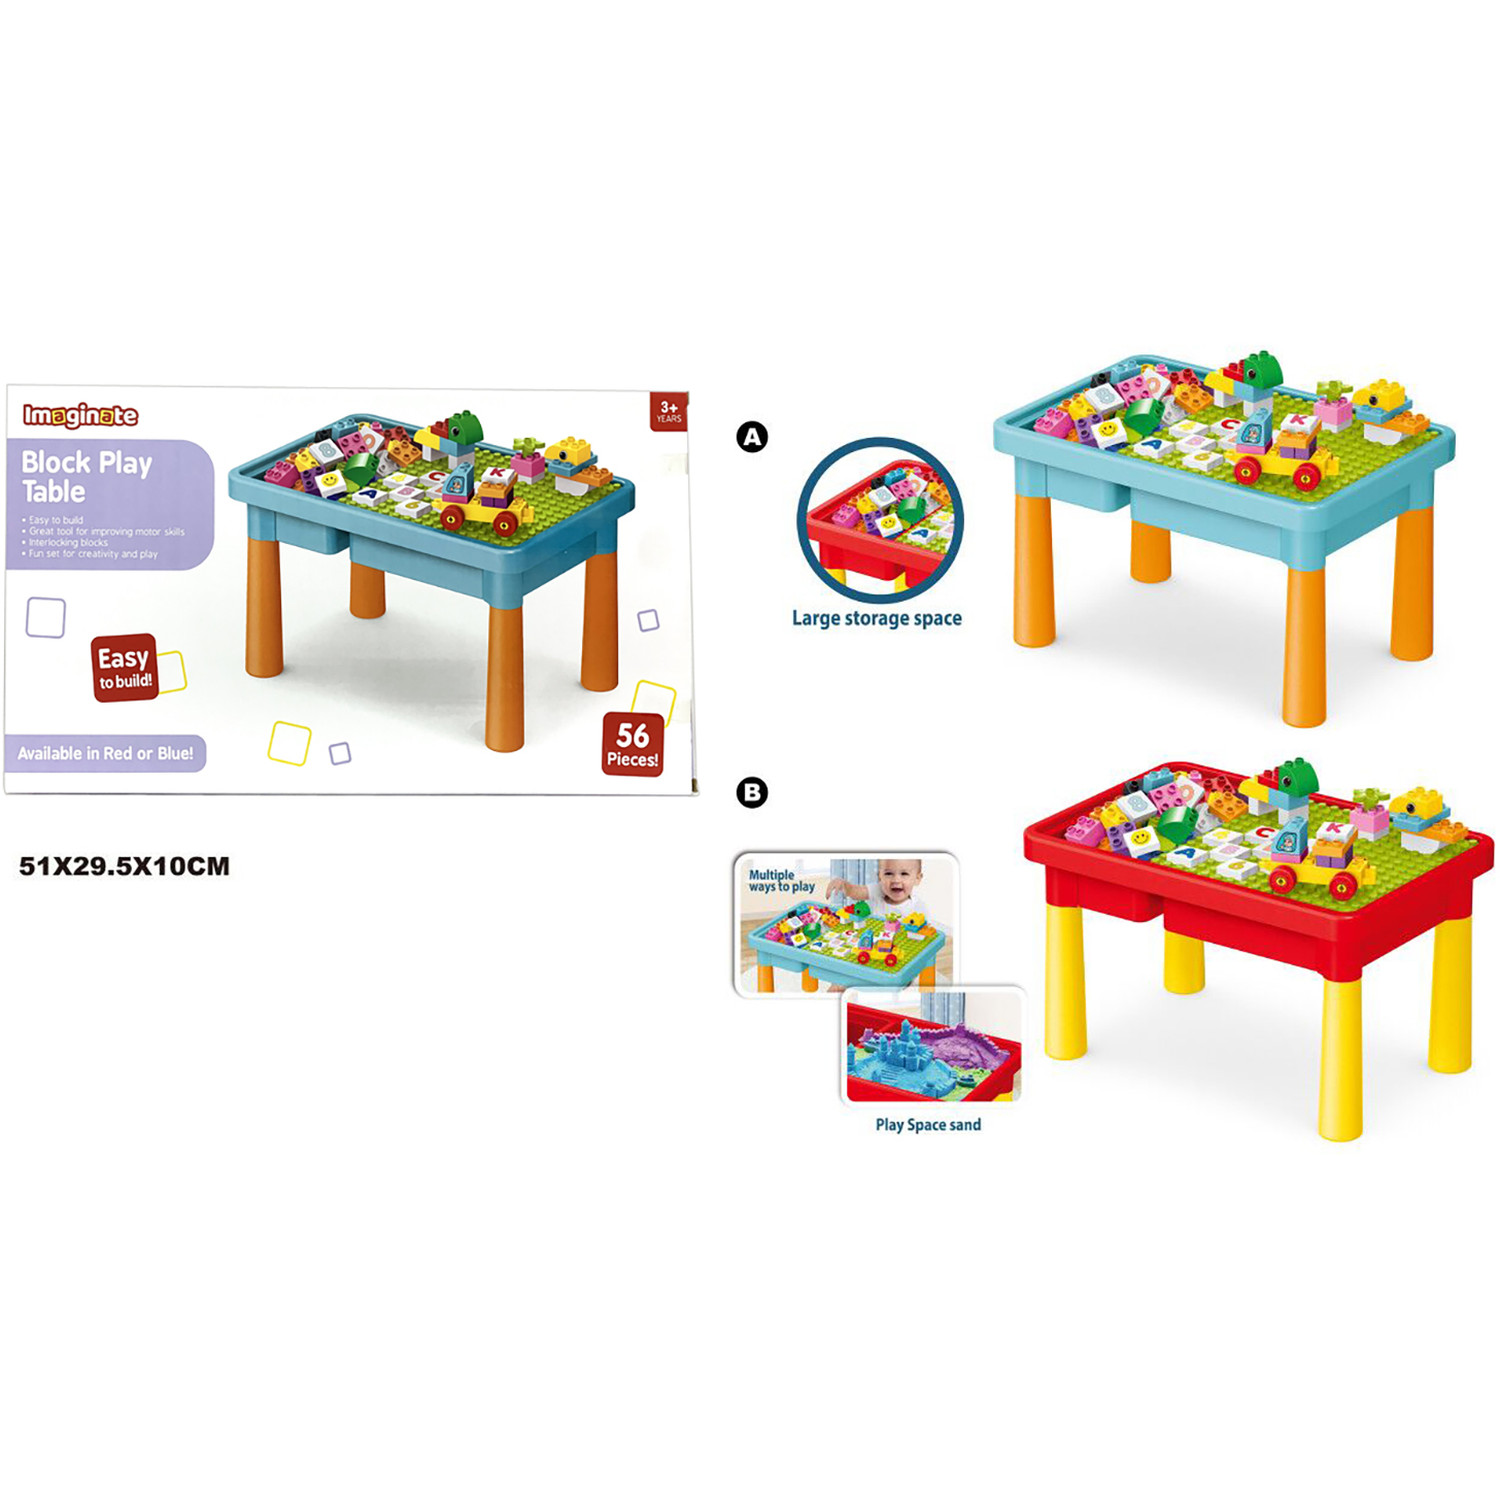 Imaginate Block Play Table Image